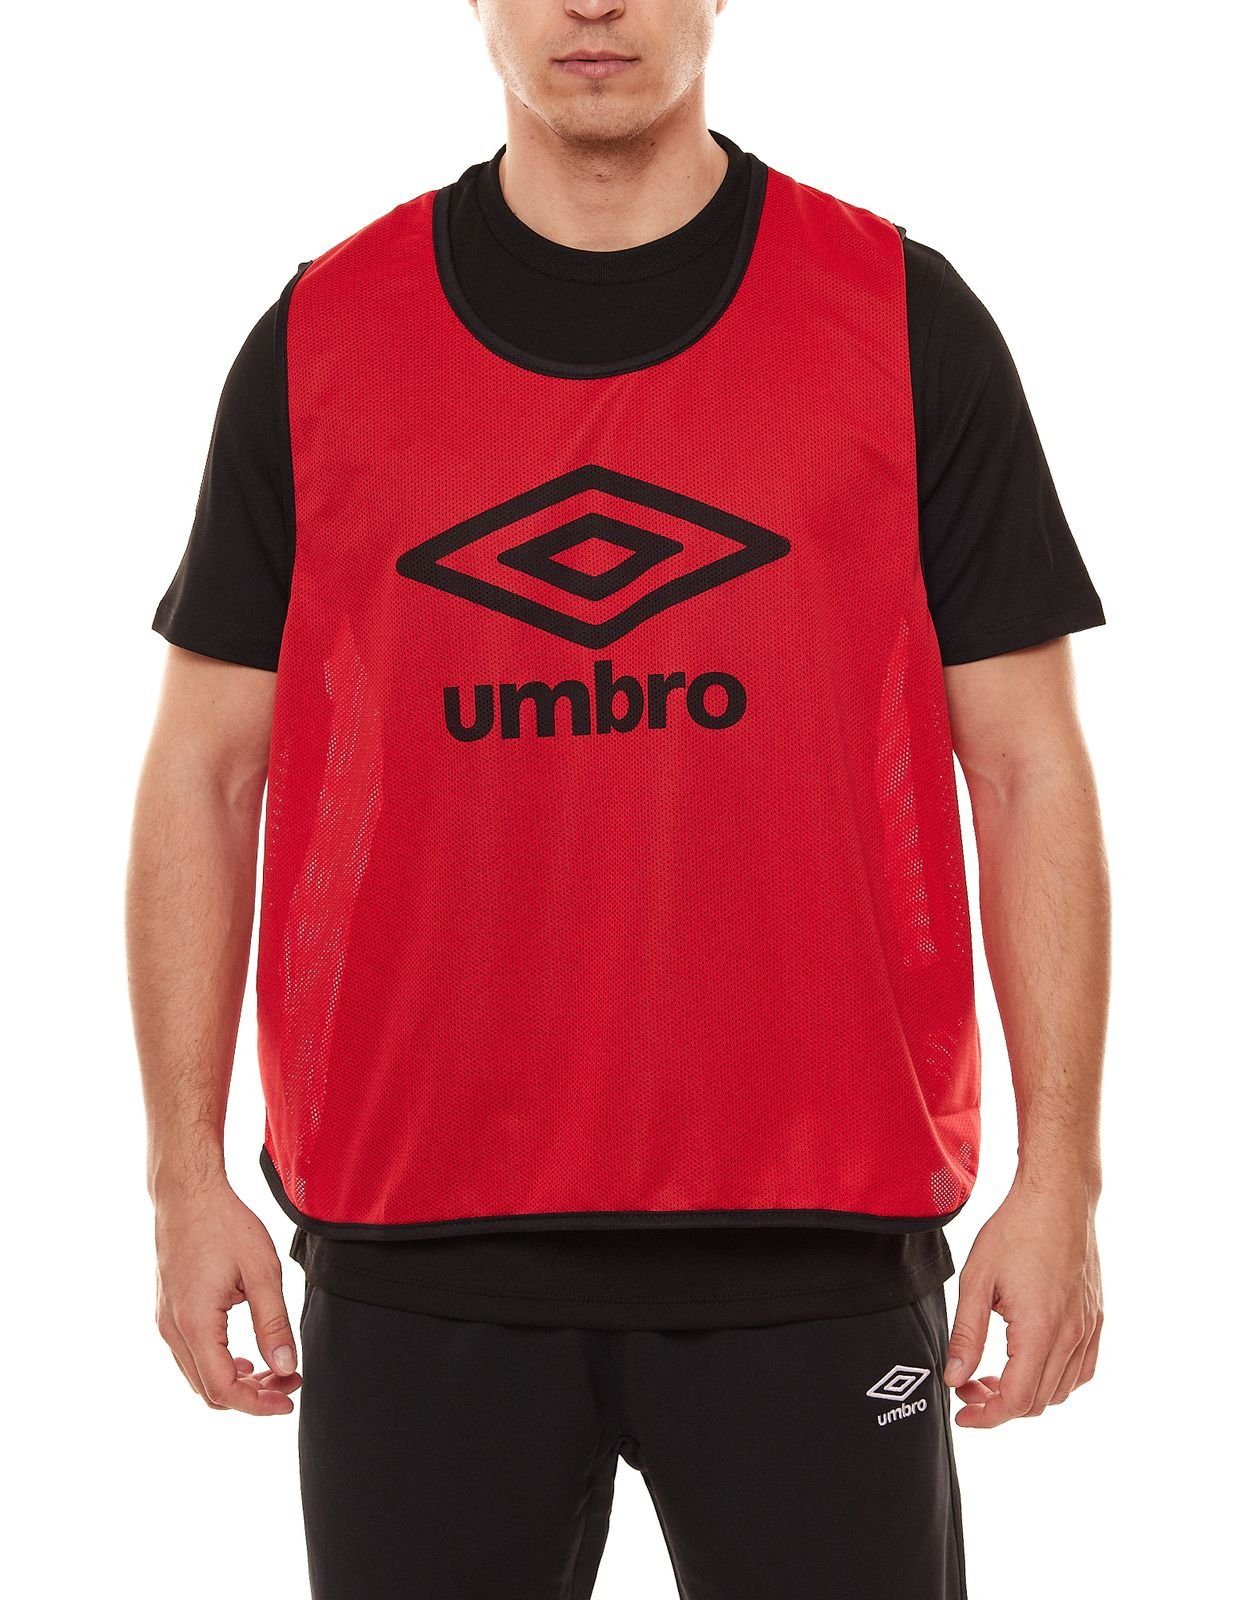 Umbro Funktionsshirt umbro Training Bib Herren Trainings-Leibchen Shirt UMTM0460-B26 Fußball-Shirt Rot